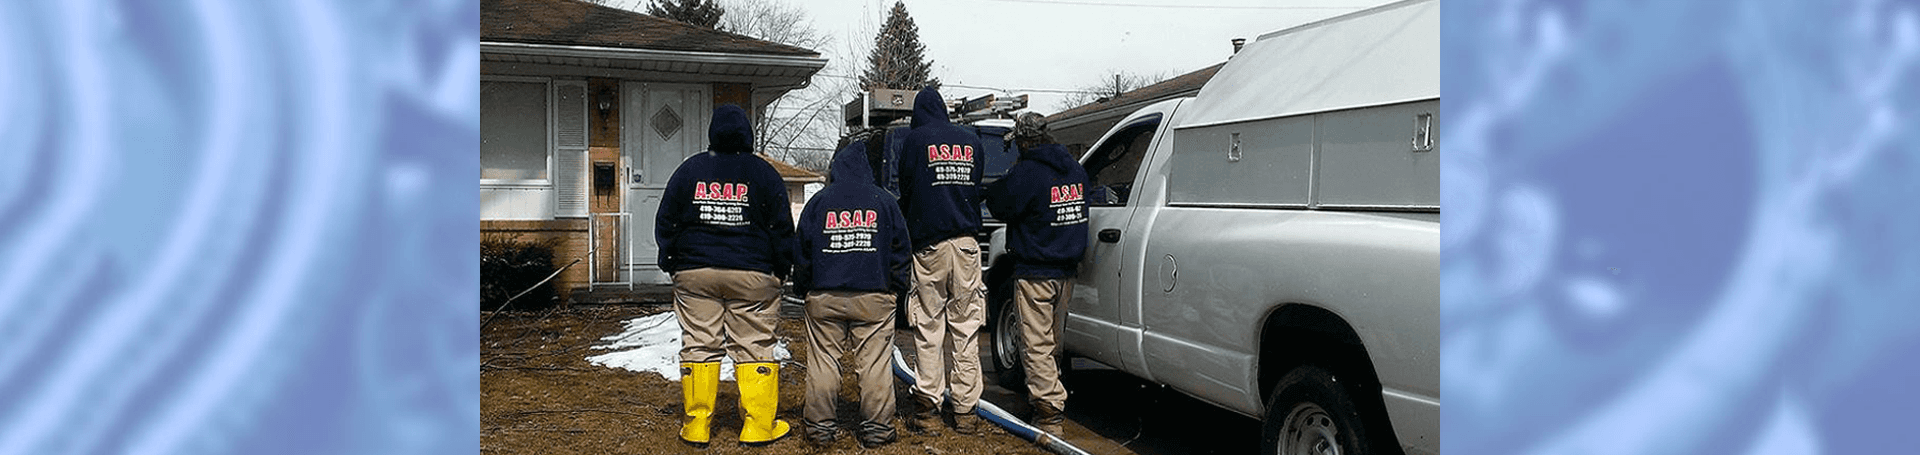 ASAP American Sewer And Plumbing Staffs